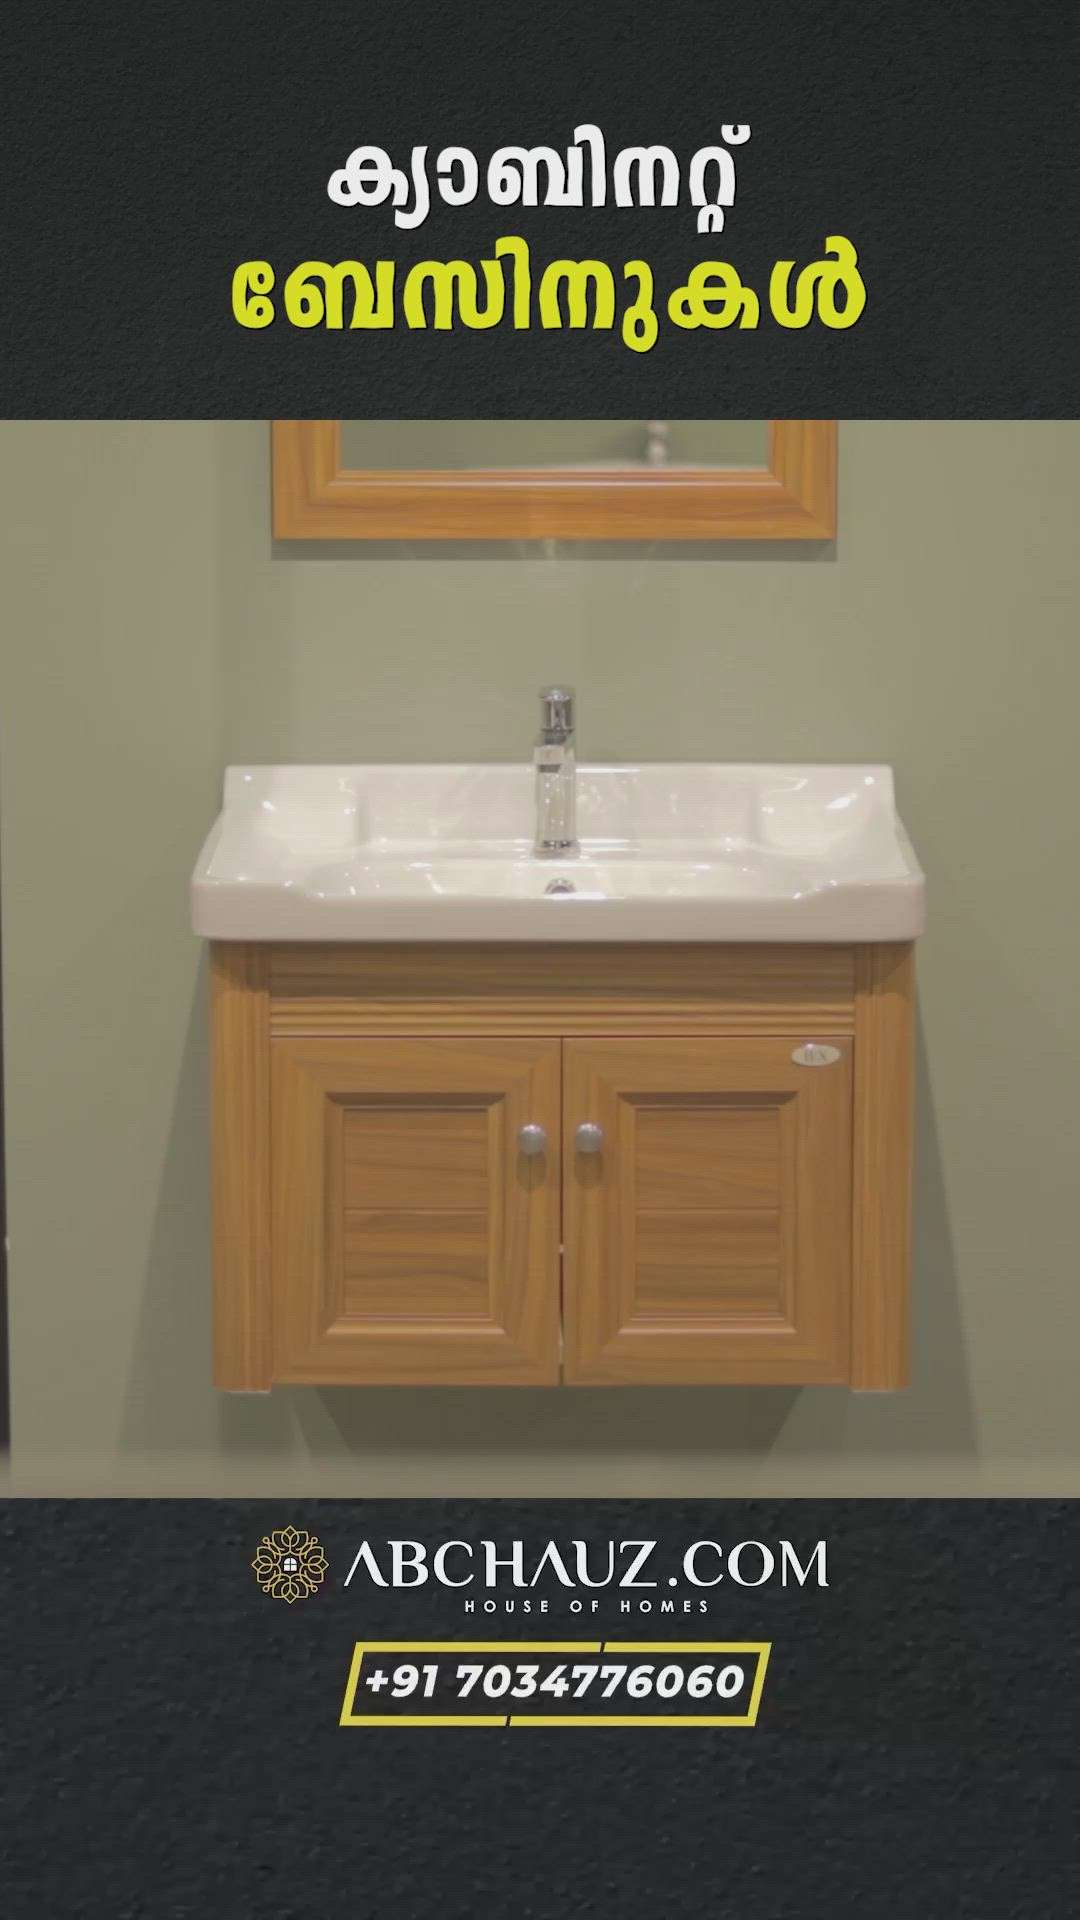 Looking for a new wash basin for your home? നിങ്ങൾക്കായിതാ ഉഗ്രൻ Cabinet Wash Basin Designs.

Watch full video: https://youtu.be/ML1L-DJlp5k

#abchauzindia #ABCGroup #cabinetdesign #kitchencabinets #washbasins #washbasindesign #washbasindecor #interiordecor #homeconstruction #countertops